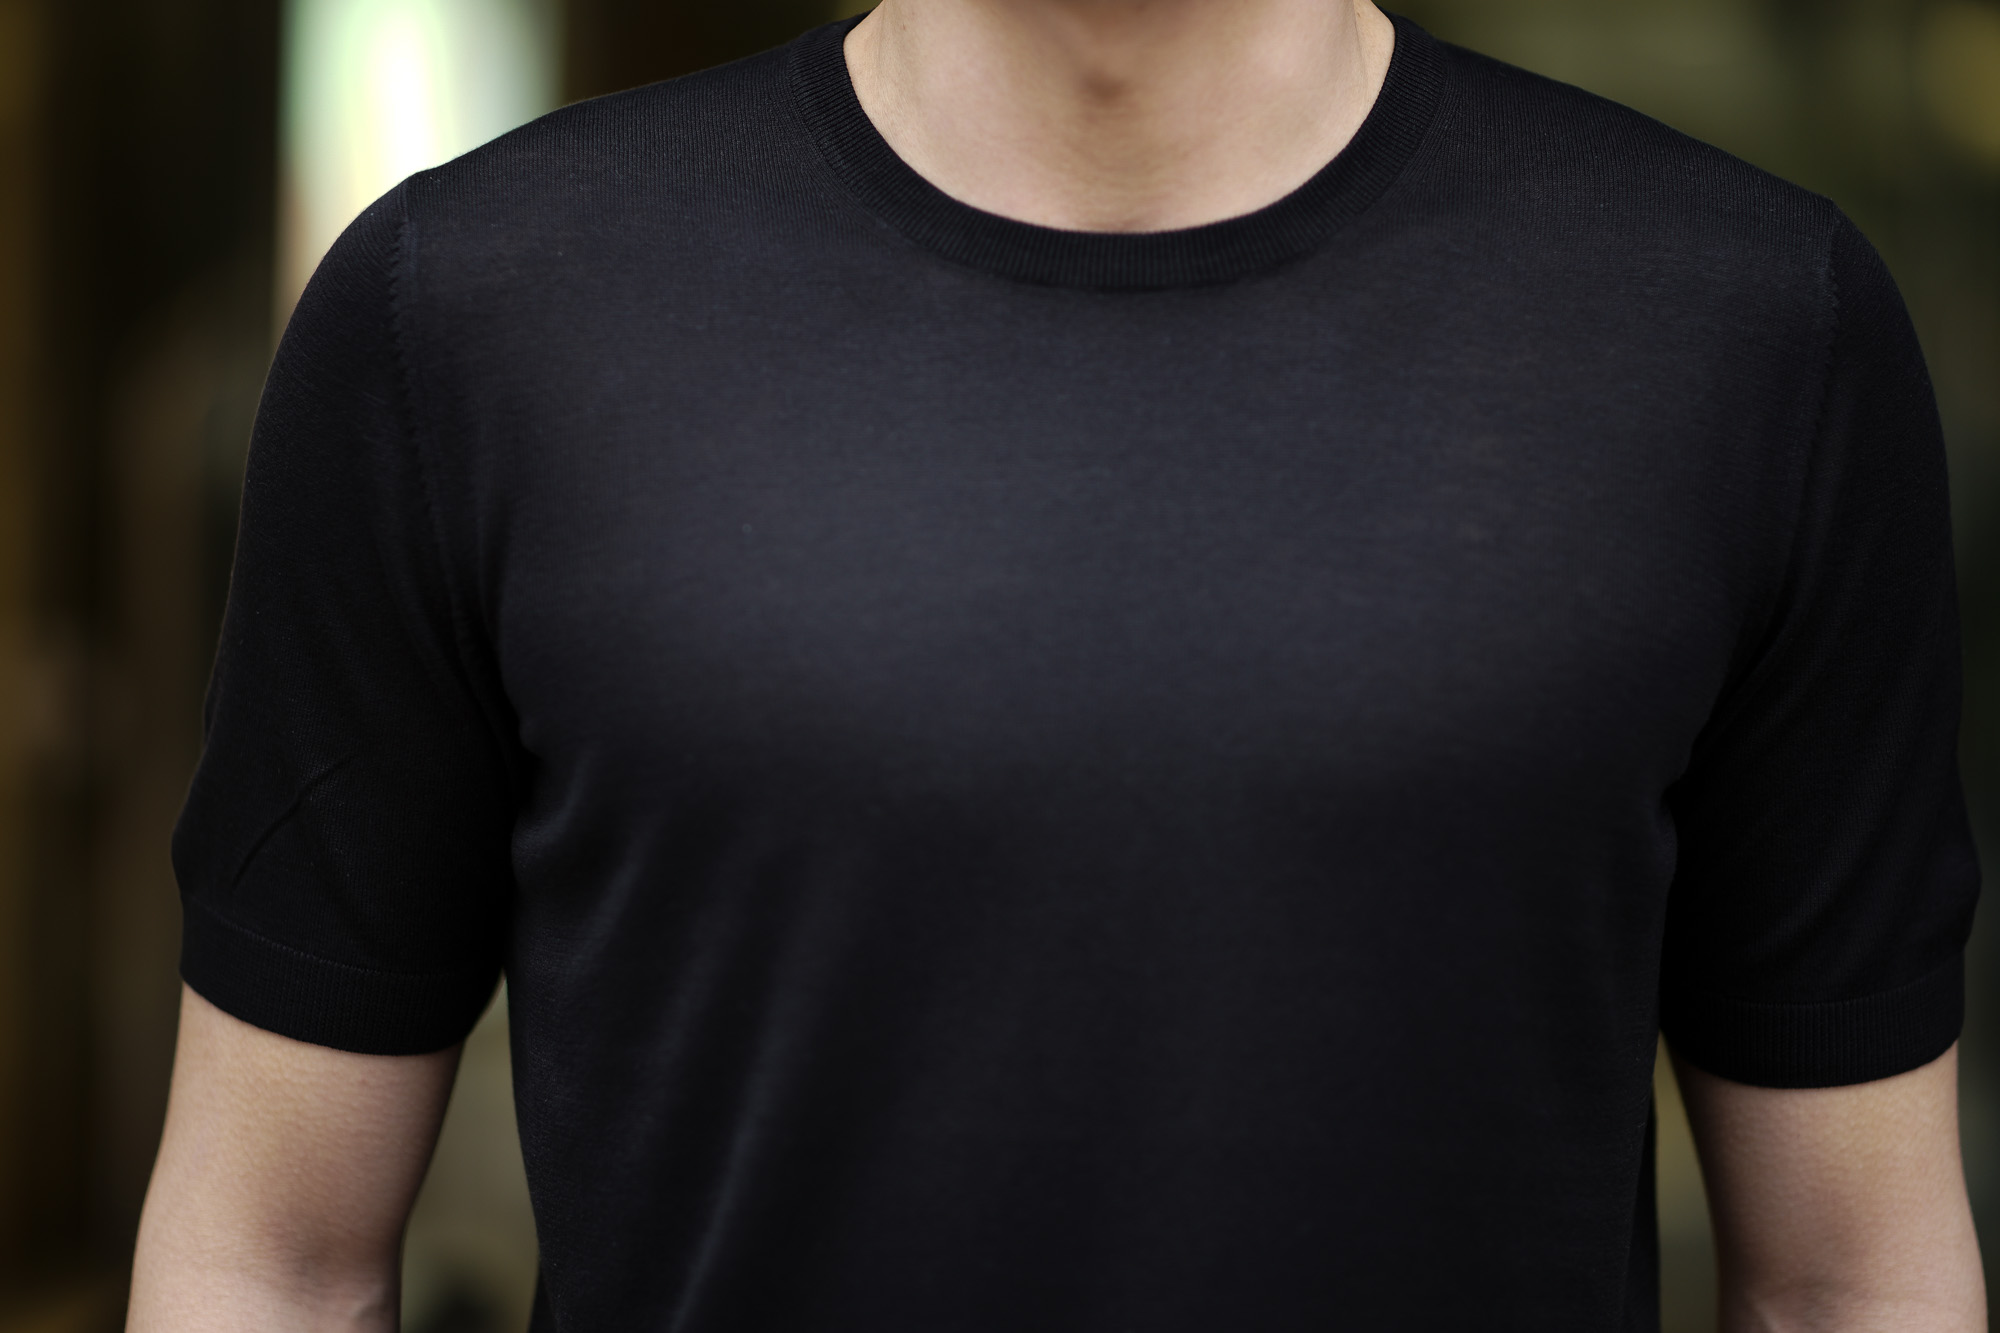 Gran Sasso (グランサッソ) Silk Knit T-shirt (シルクニット Tシャツ) SETA (シルク 100%) ショートスリーブ シルク ニット Tシャツ BLACK (ブラック・099)　made in italy (イタリア製) 2020 春夏新作  gransasso 愛知 名古屋 altoediritto アルトエデリット